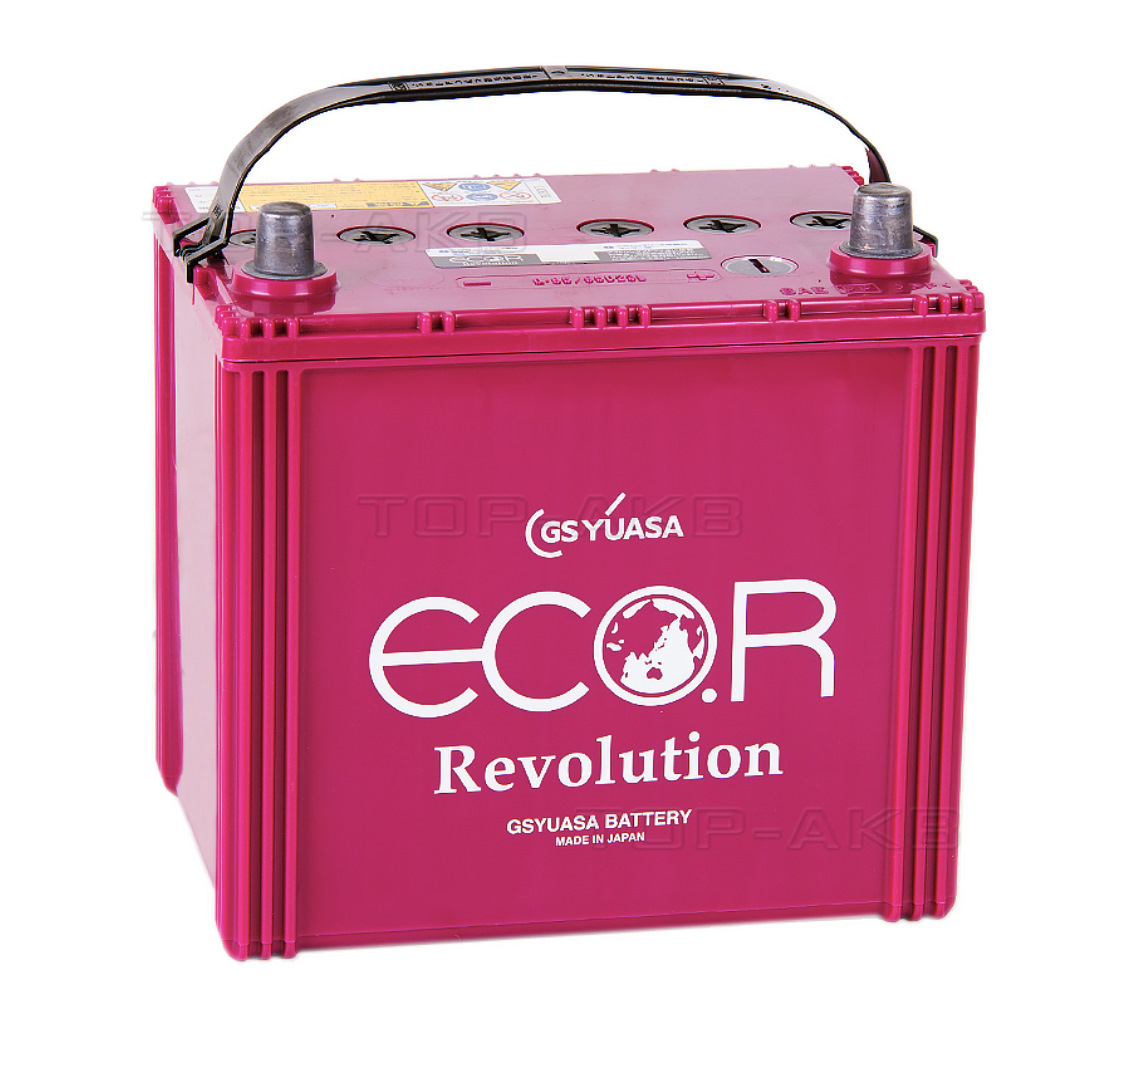 Https vvv eco r wcmqfqcc. Автомобильный аккумулятор GS Yuasa er-q-85 95d23l (70r 650a 233x173x227) Eco.r Revolution start-stop. Аккумулятор GS Yuasa q85. Аккумулятор Eco.r Revolution 95d23l (q-85). GS Yuasa Eco.r Revolution er-n-65 (75b24l).